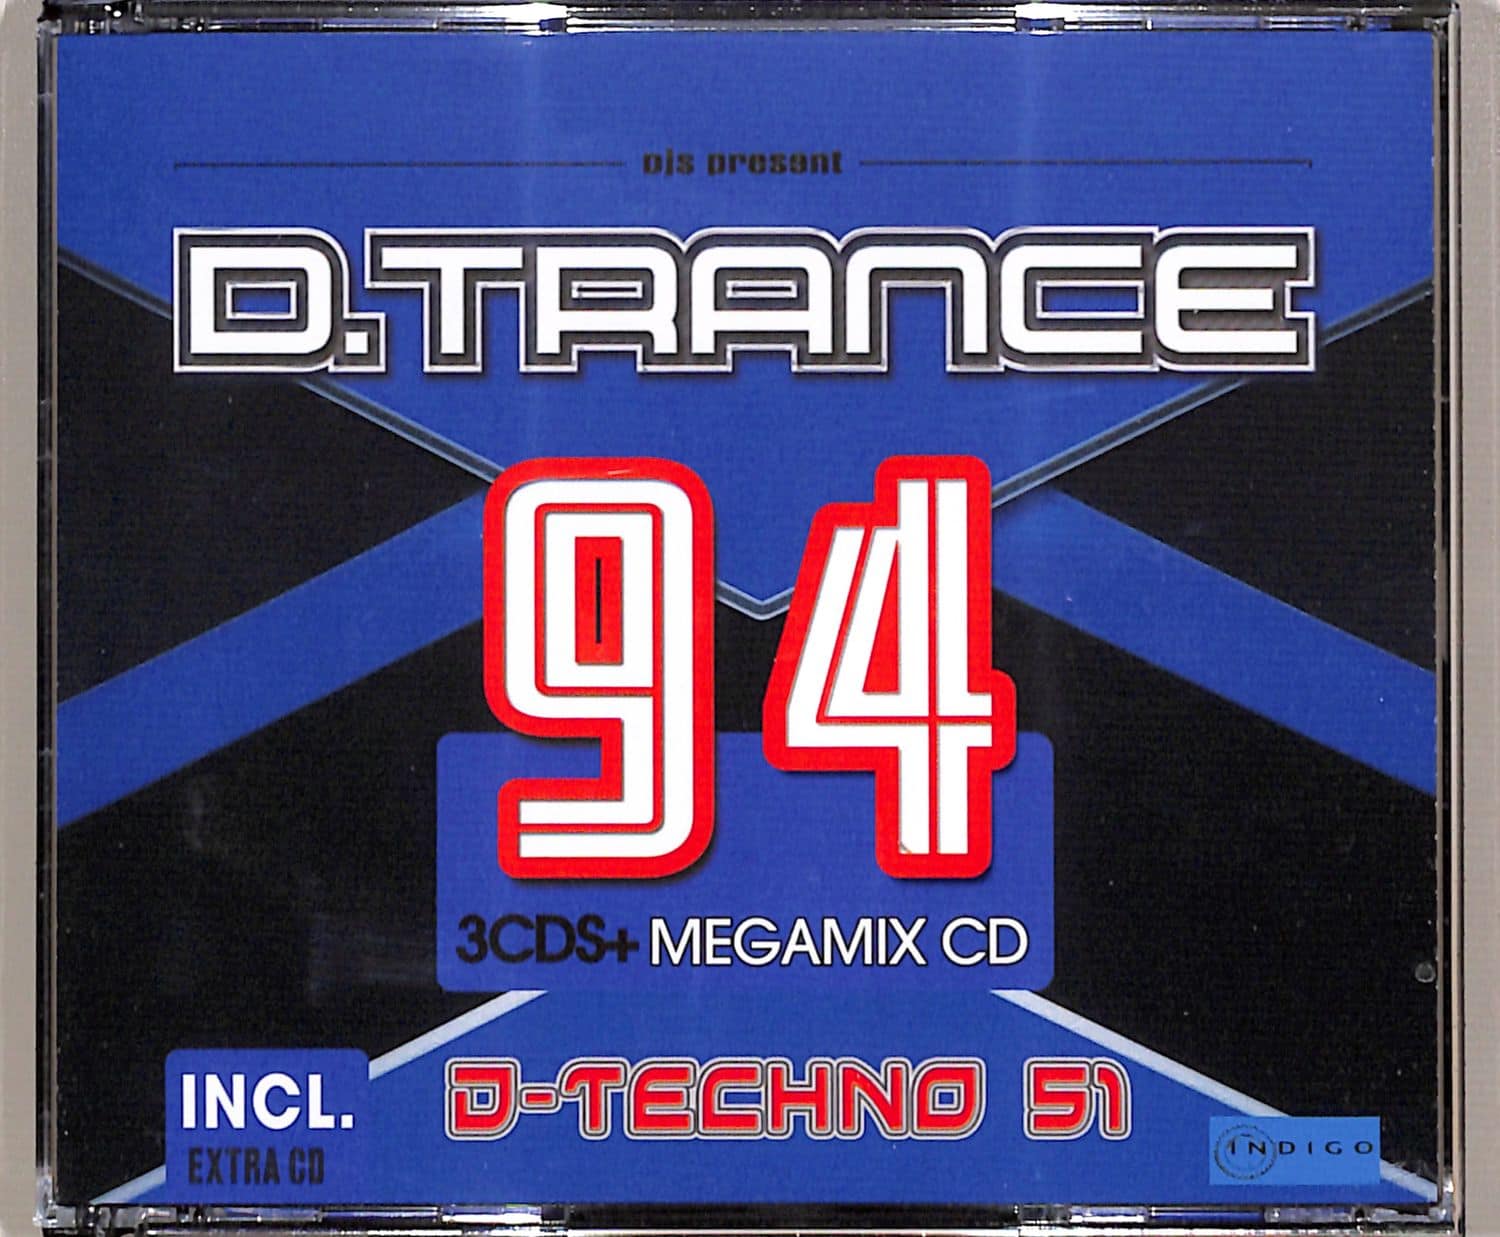 Various Artists - D.TRANCE 94 + D-TECHNO 51 